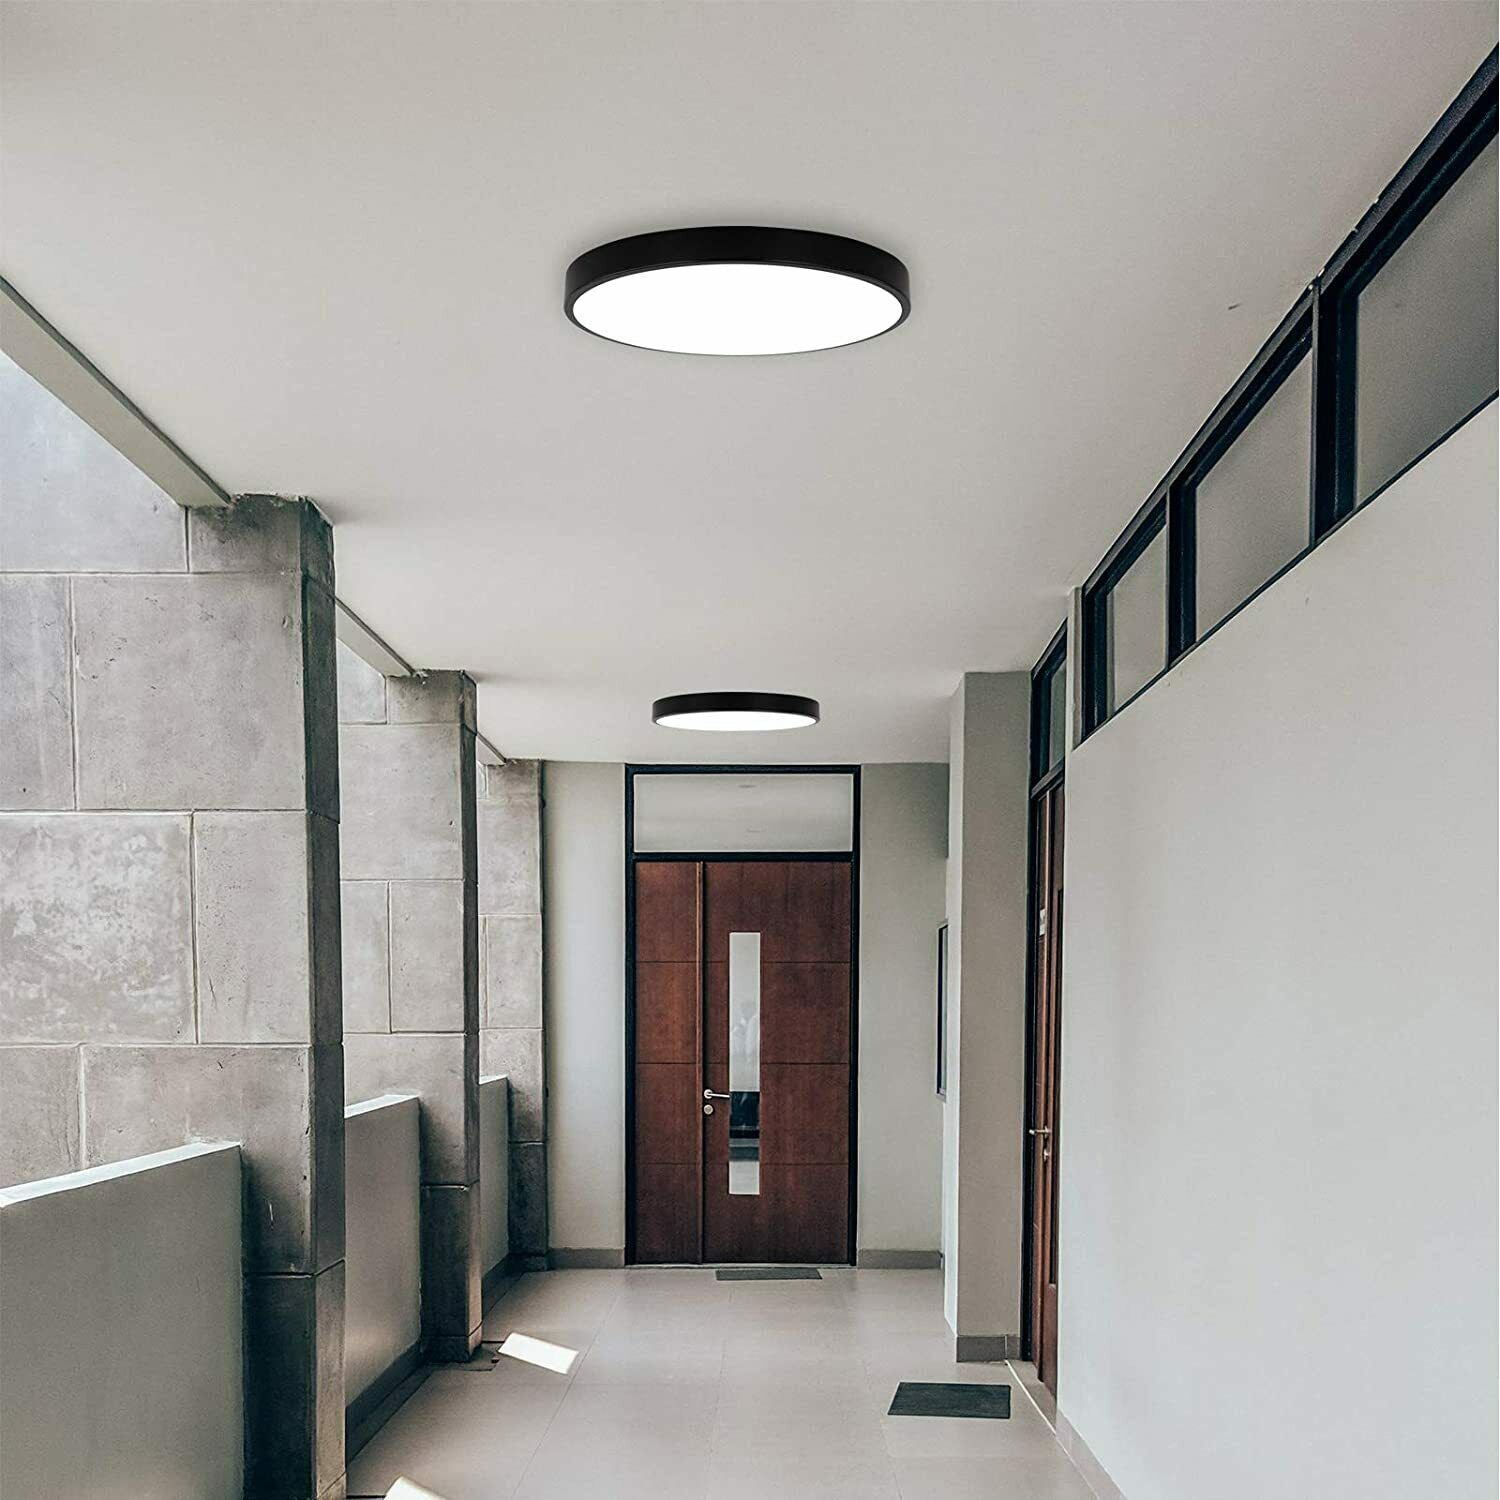 Ultra-THIN LED Ceiling Down Light- Black